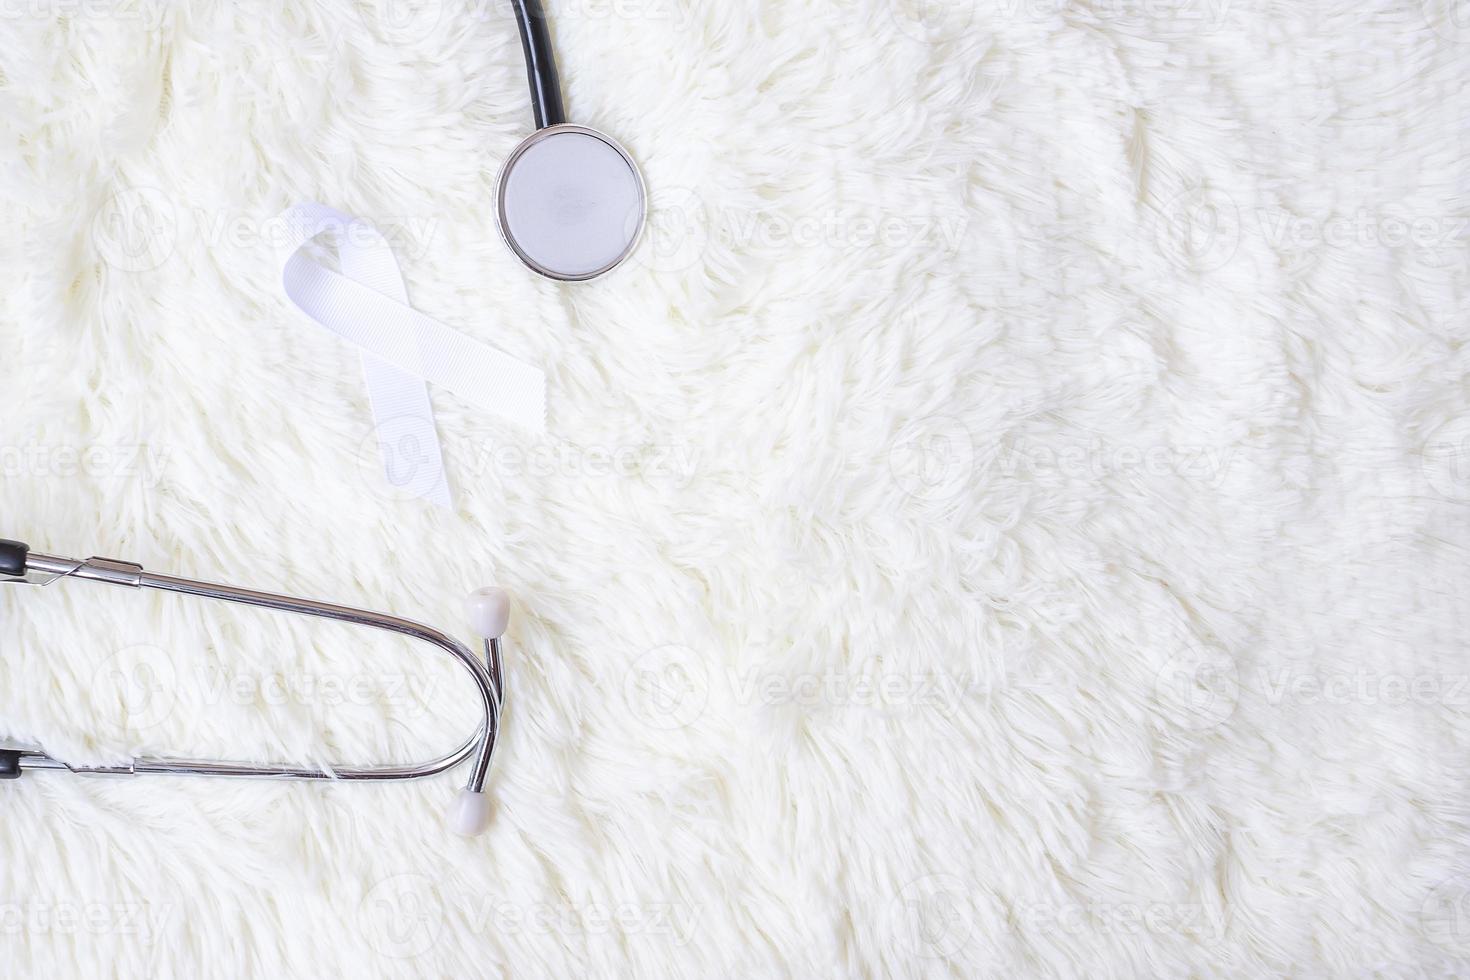 vitt band med stetoskop på vit bakgrund. november lungcancer medvetenhet månad koncept foto